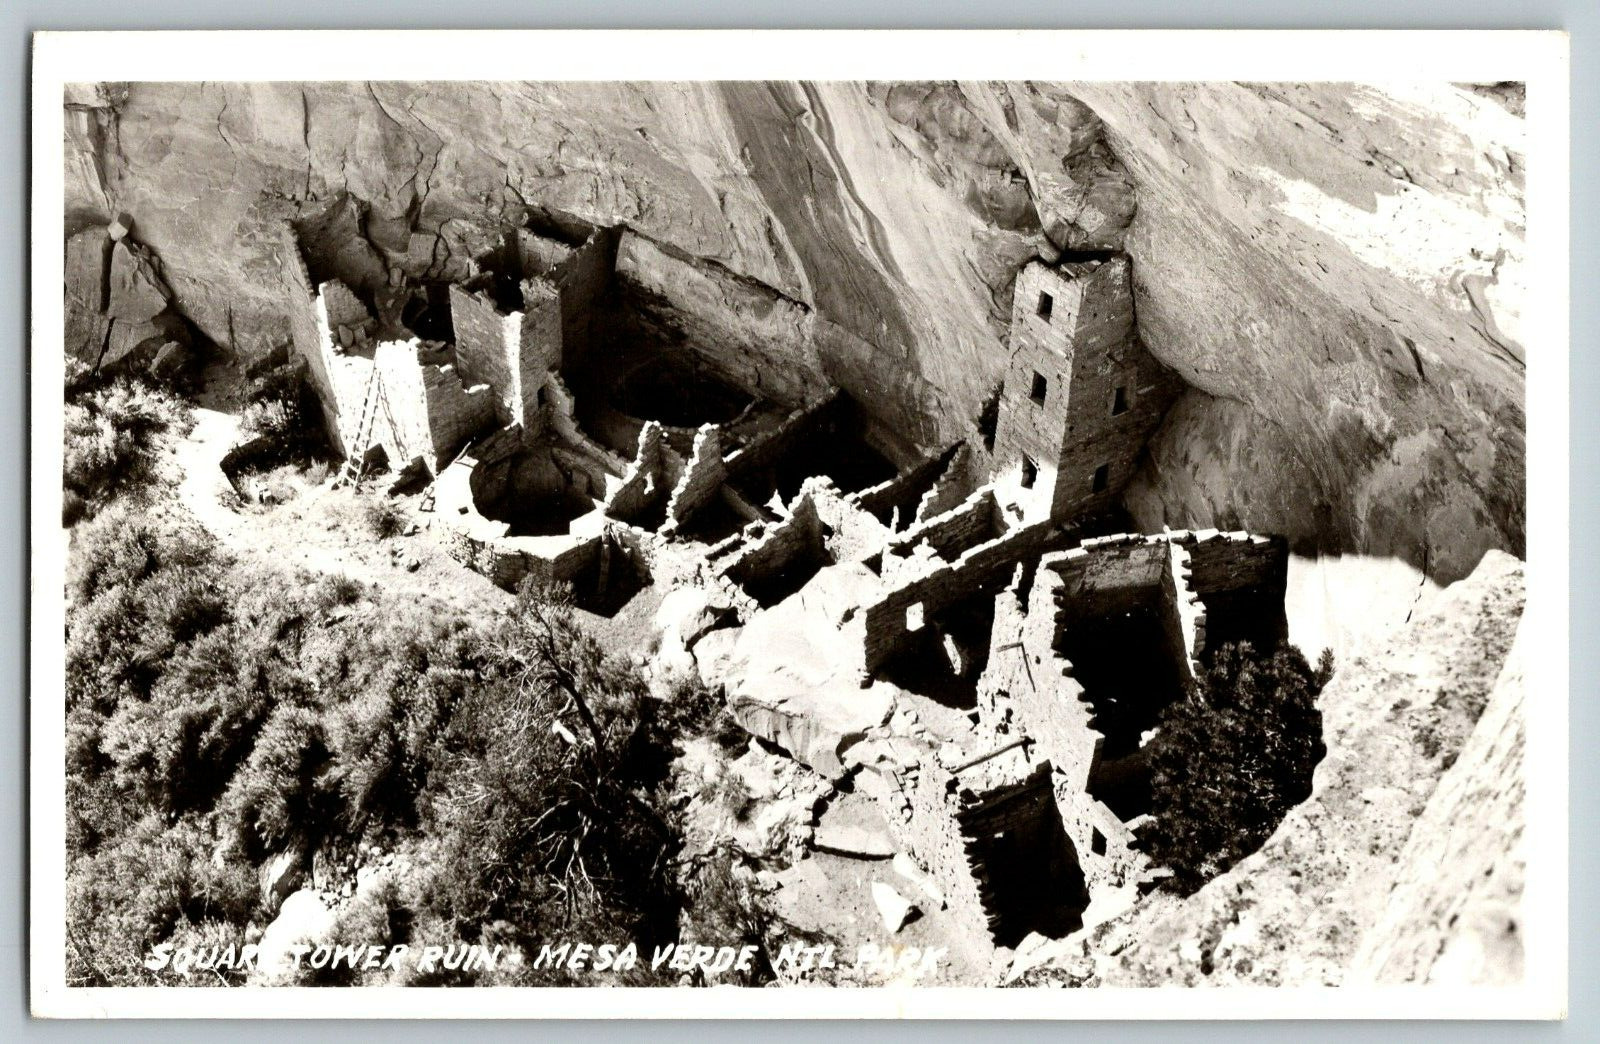 RPPC Vintage Postcard - Square Tower Ruin - Mesa Verde National Park